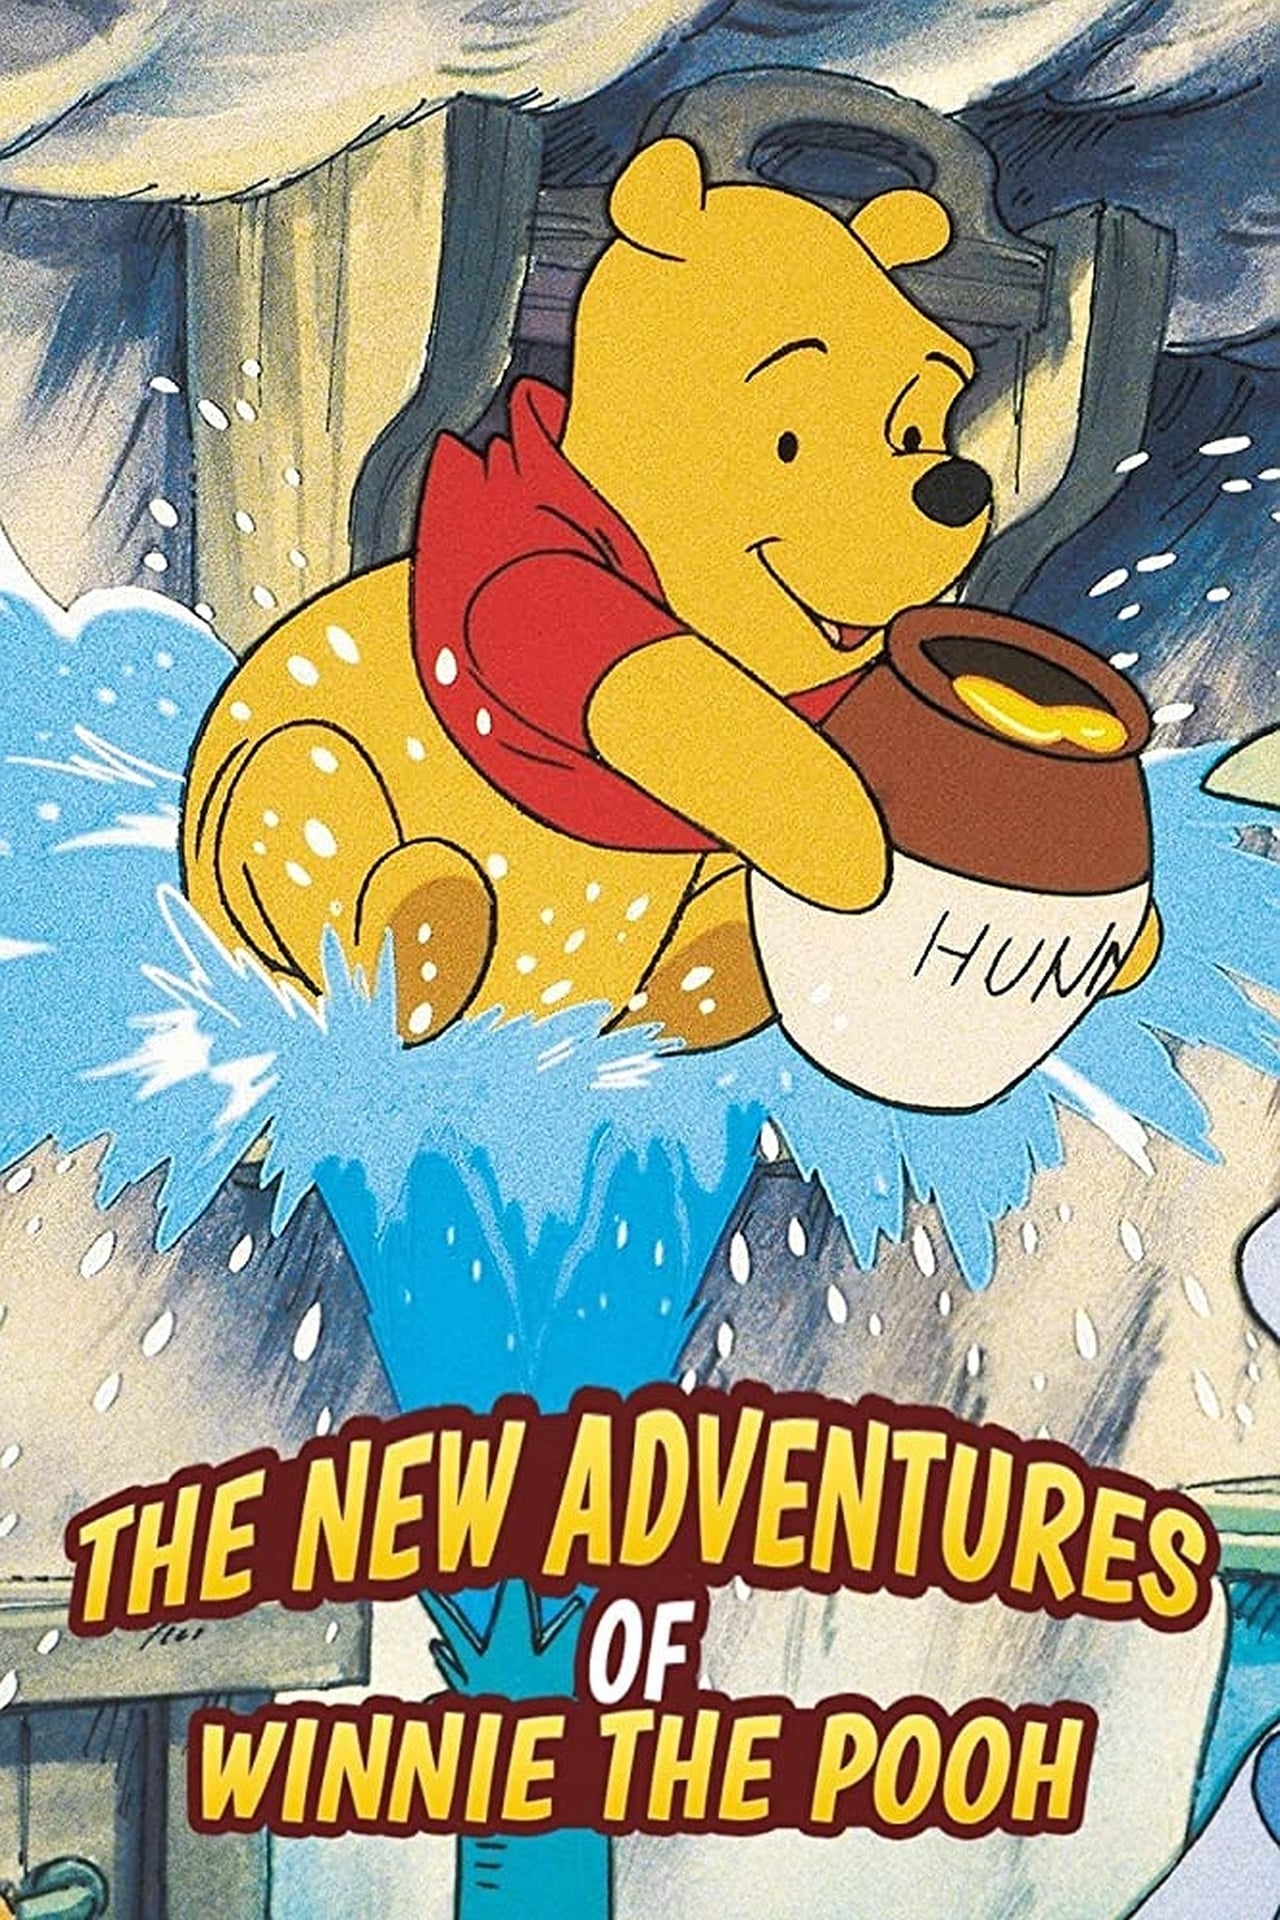 The New Adventures of Winnie the Pooh (1990) S3 EP01&EP10 128Kbps 23.976Fps 48Khz 2.0Ch Disney+ DD+ E-AC3 Turkish Audio TAC[